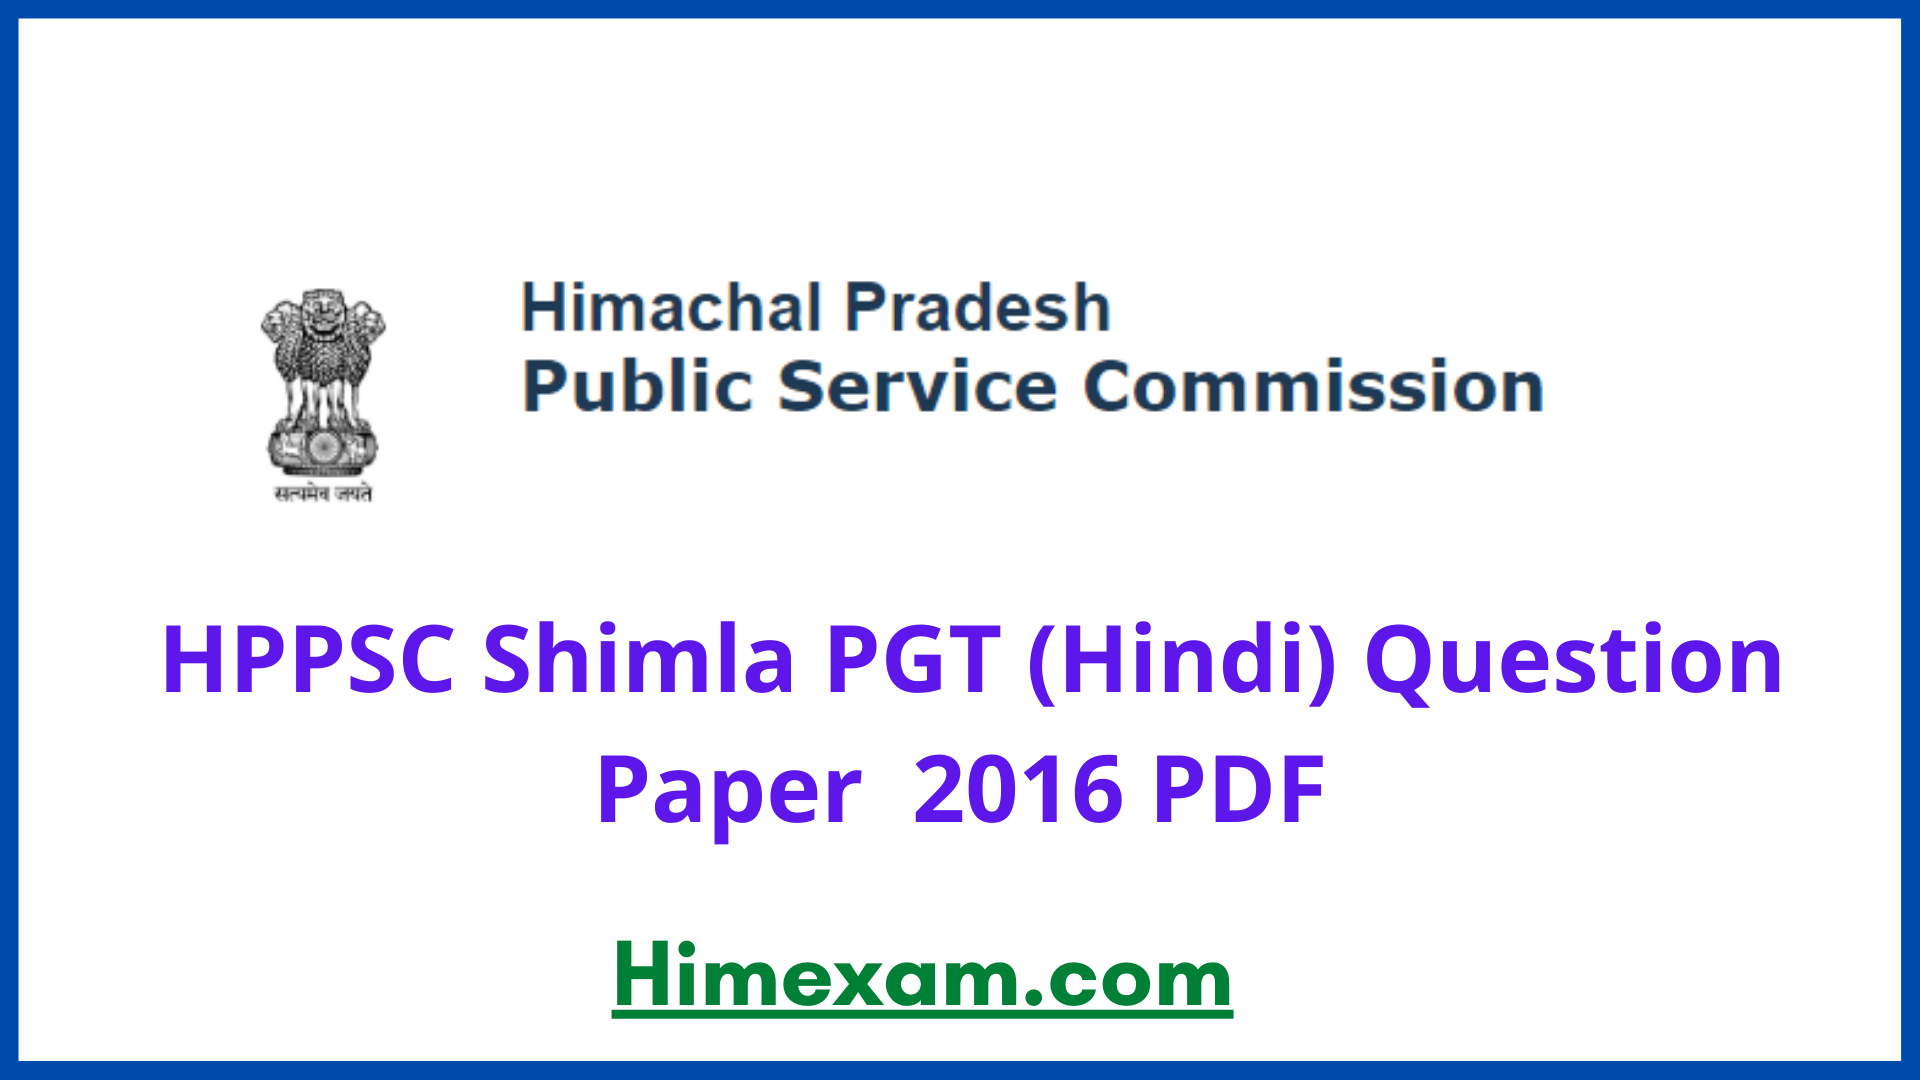 HPPSC Shimla PGT (Hindi) Question Paper  2016 PDF